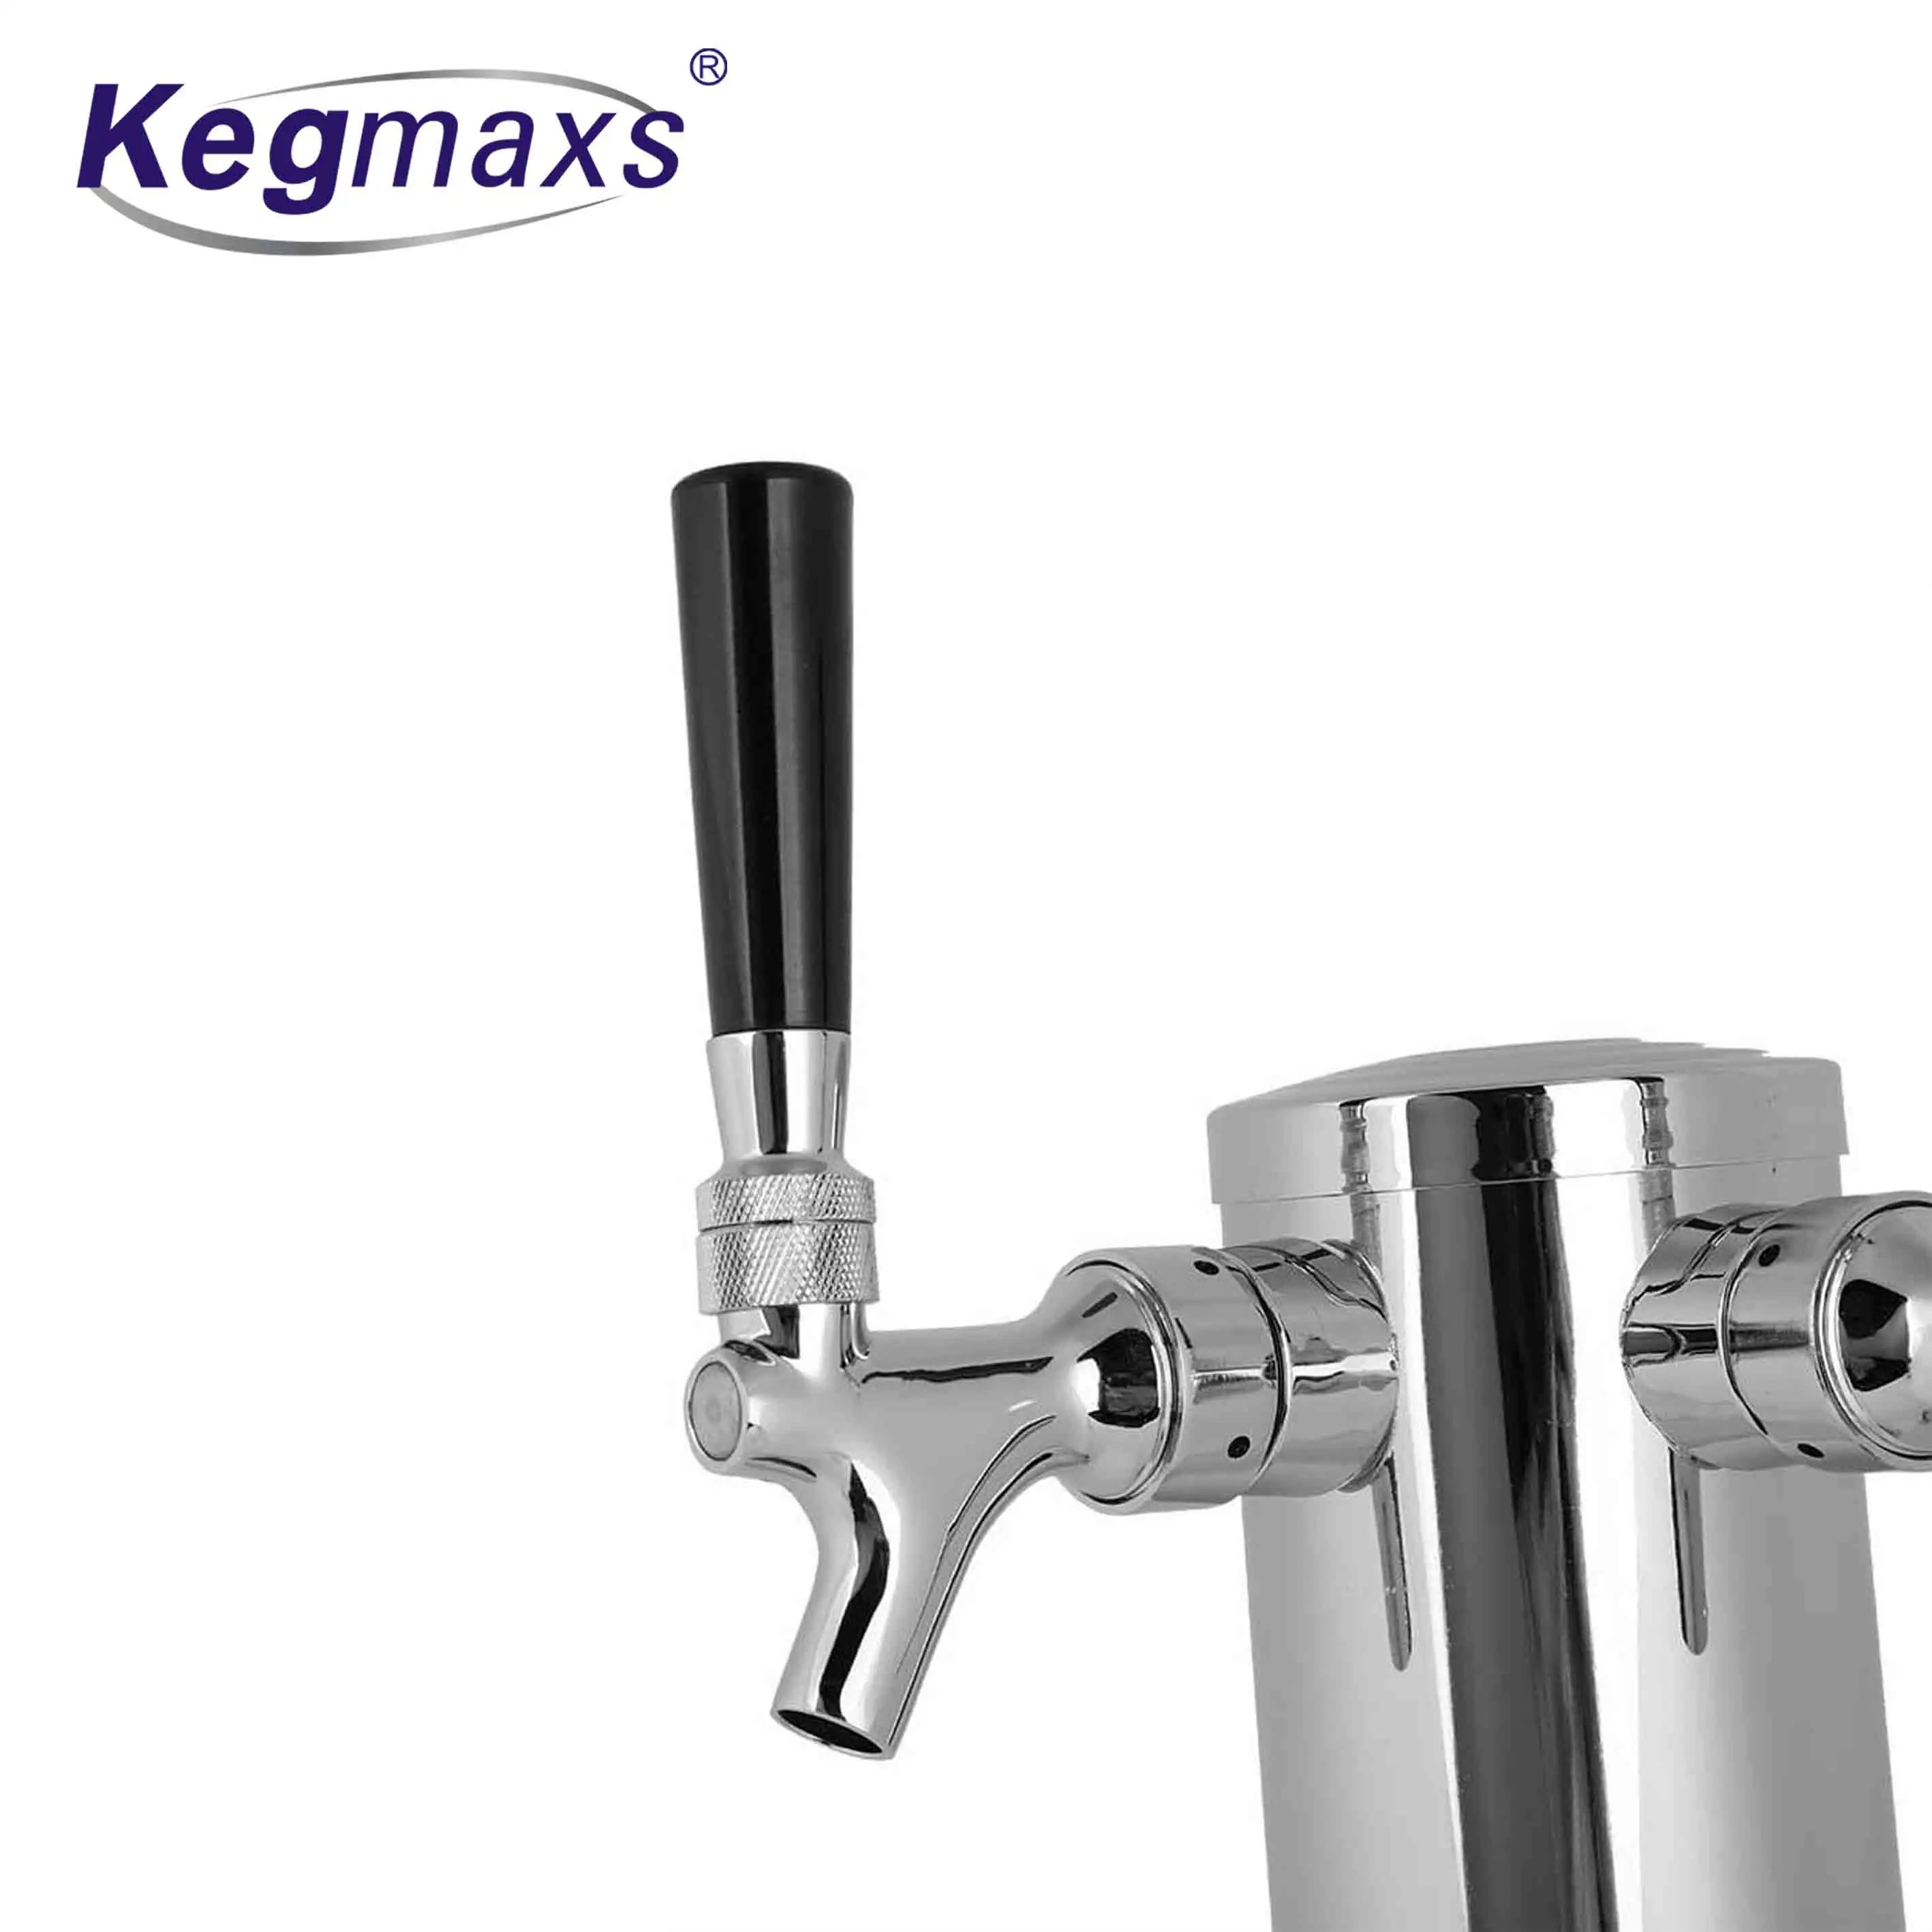 Kegmaxs Stainless Steel Beer Dispenser Draft Beer Kegerator Tower Kit with Faucet Double Tap 2 Hose Beer Tower Set